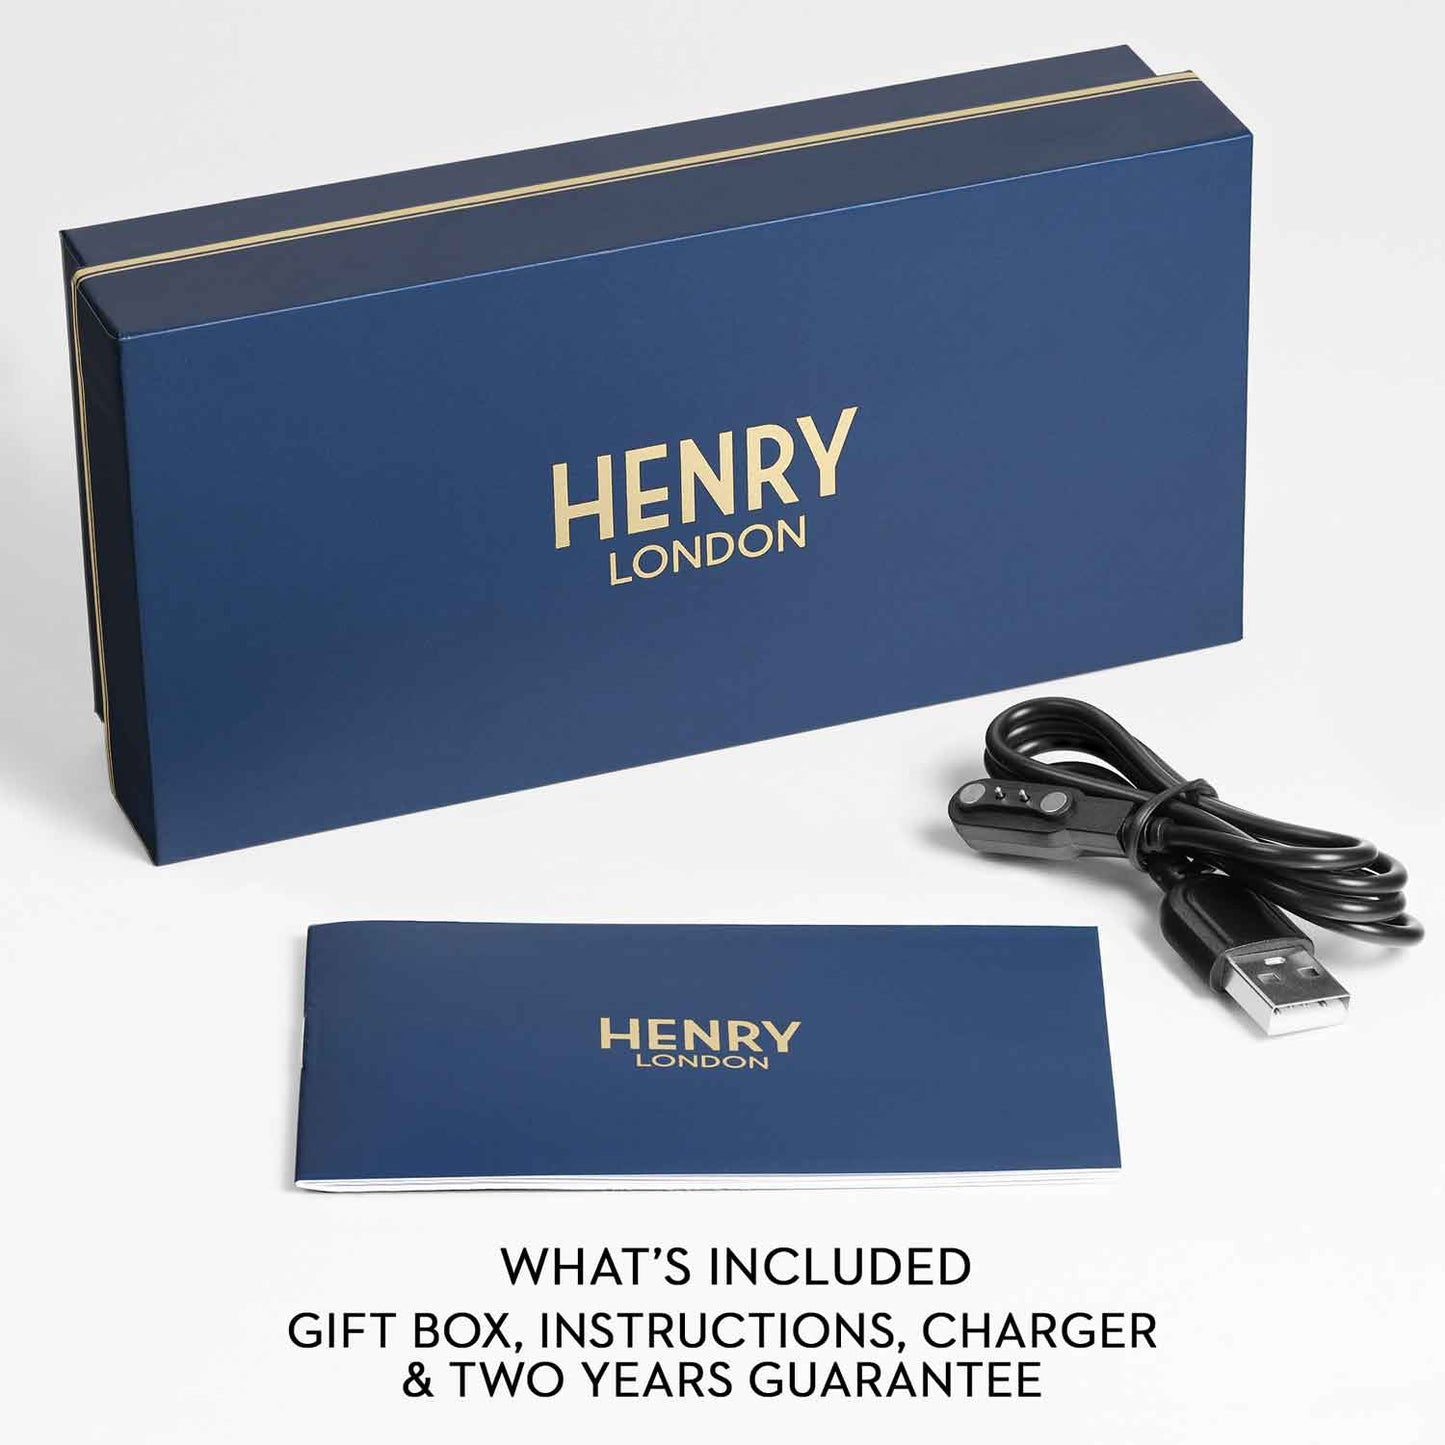 Henry London HLS65-0001 Smartwatch Rose Gold Stainless Steel Bracelet